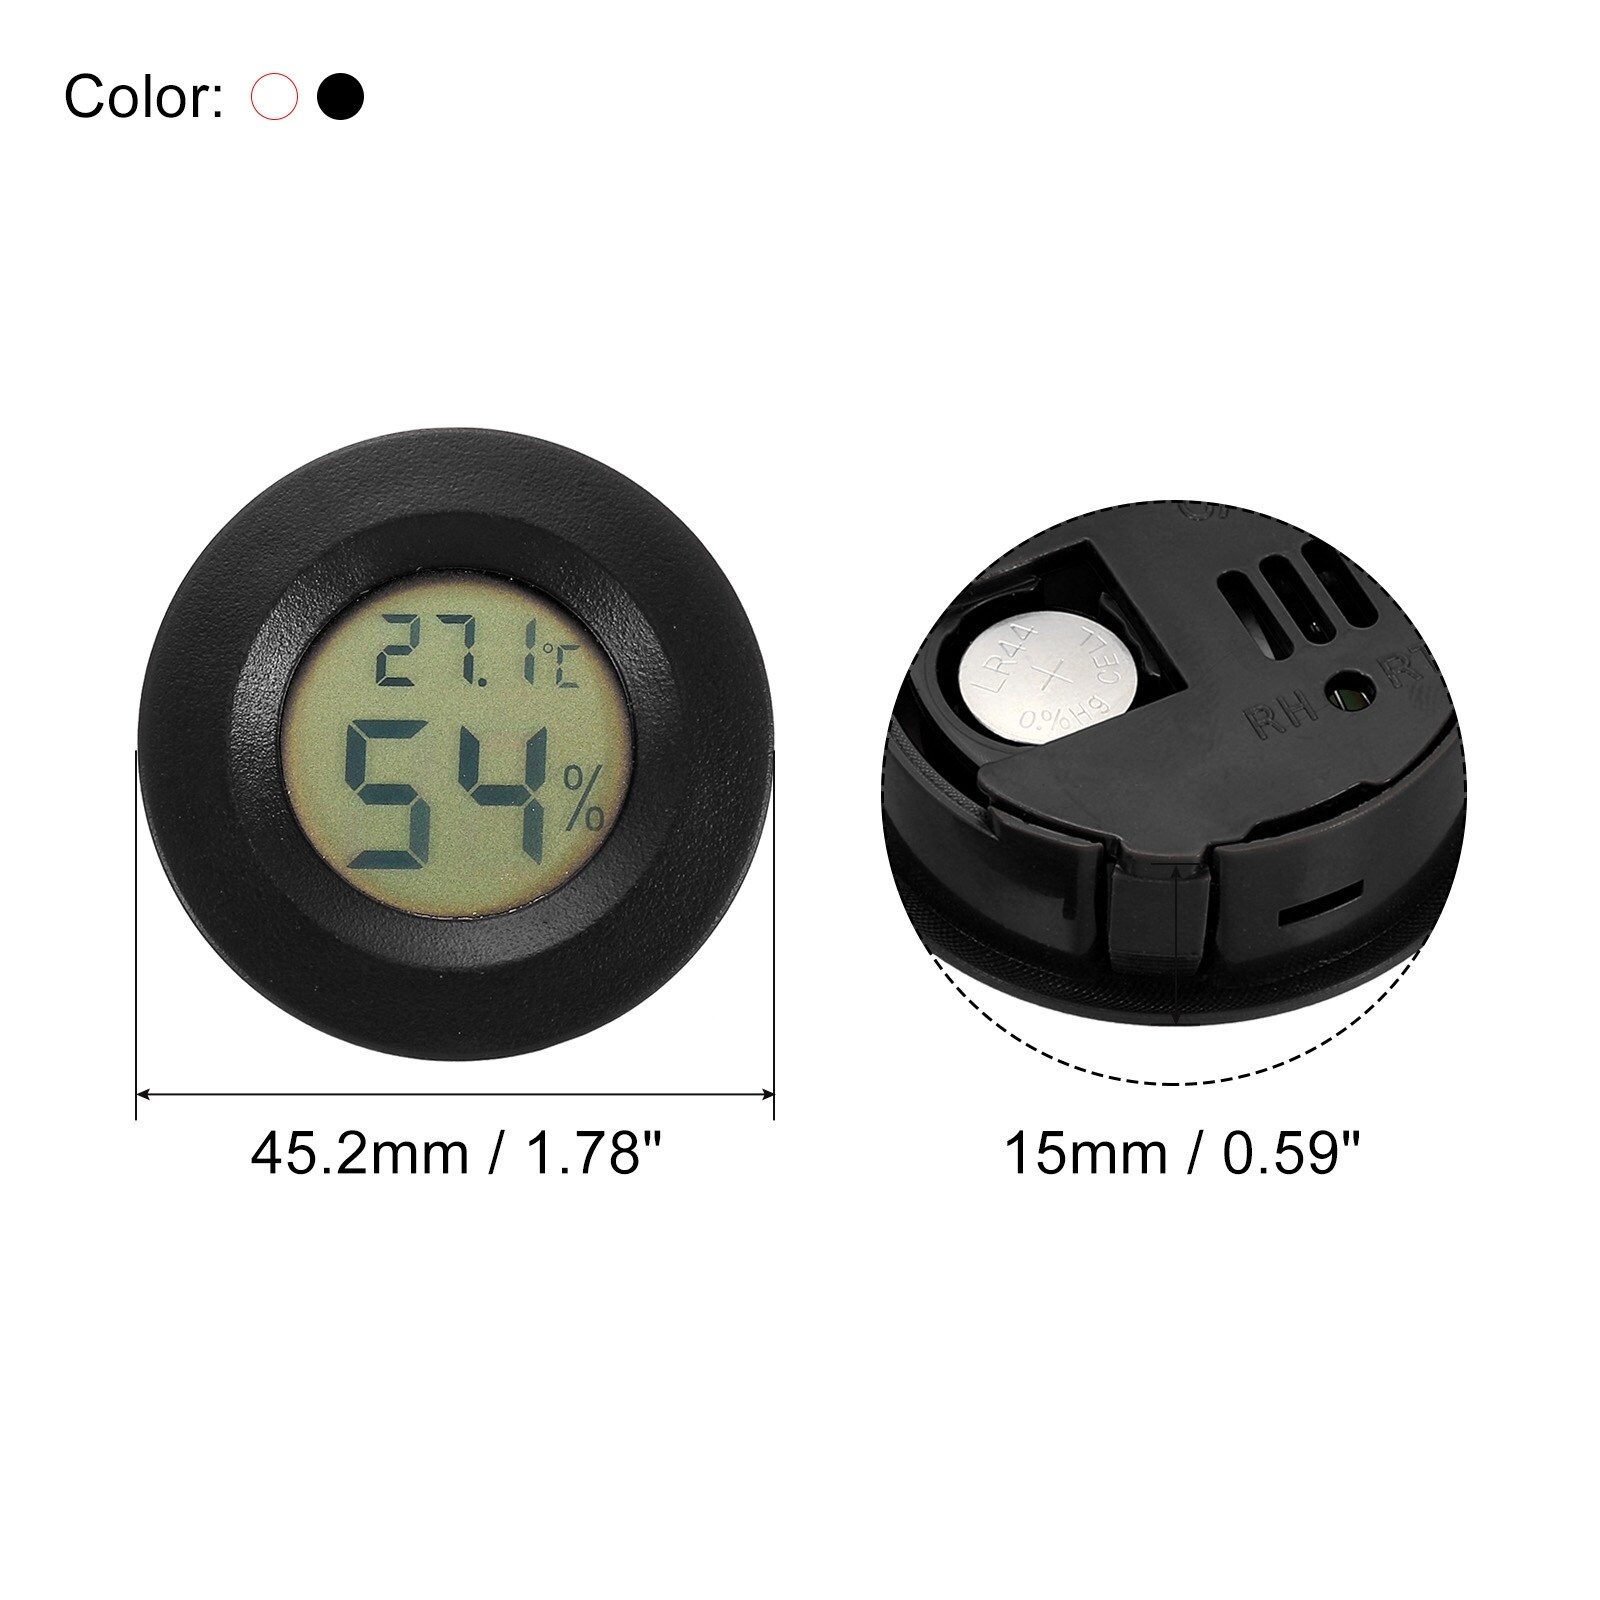 3x Mini Digital LCD Temperature Humidity Meter Thermometer (Black  Fahrenheit)